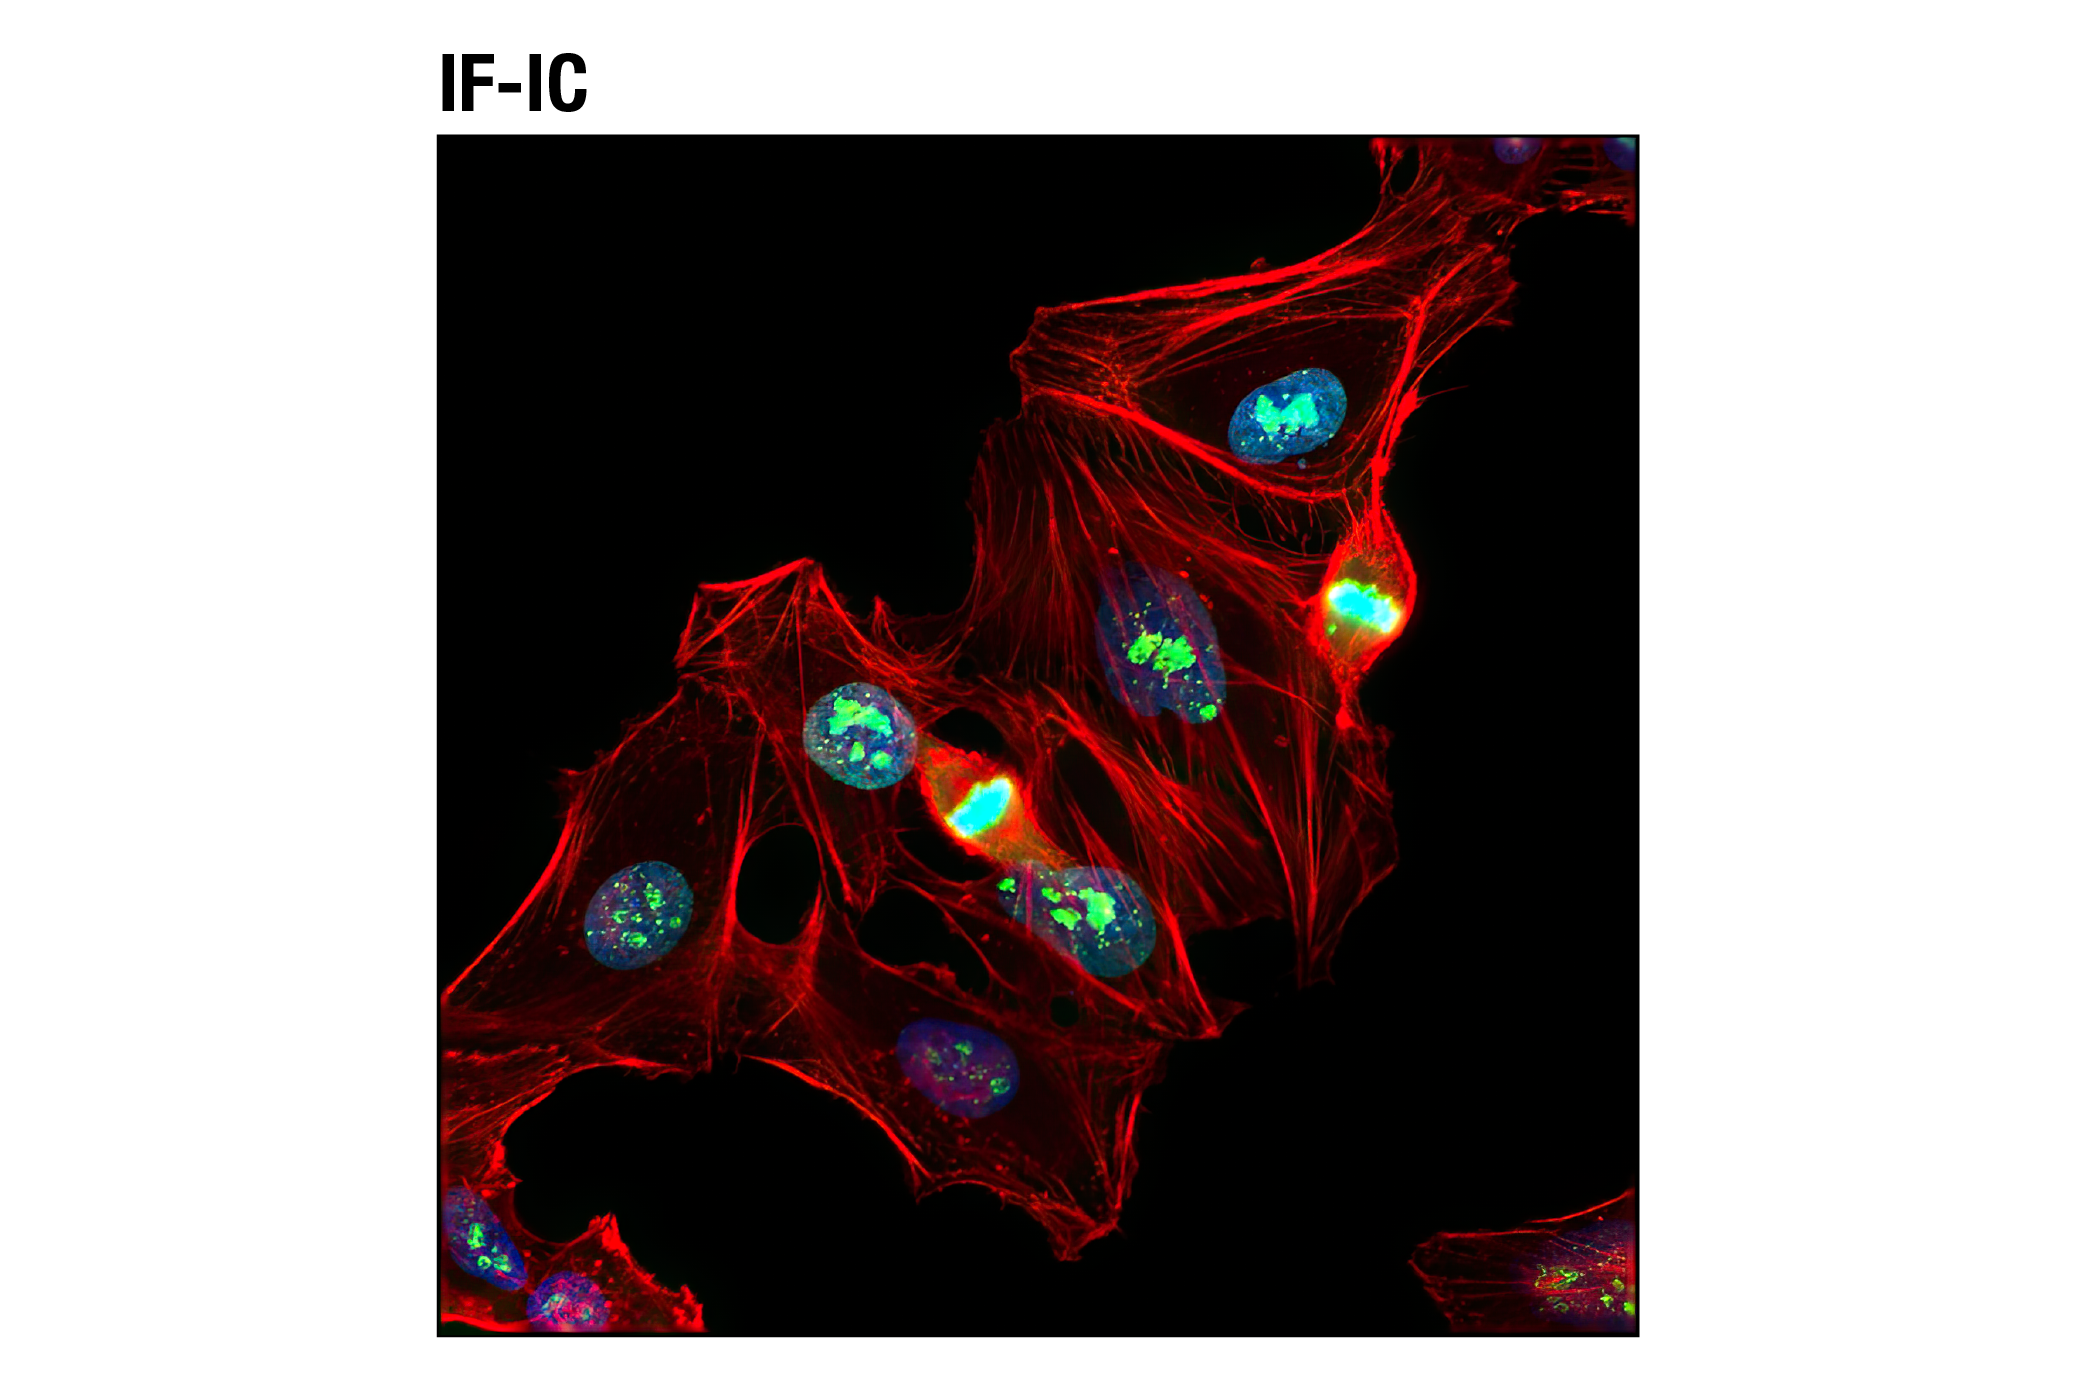  Image 21: Mouse Microglia Marker IF Antibody Sampler Kit